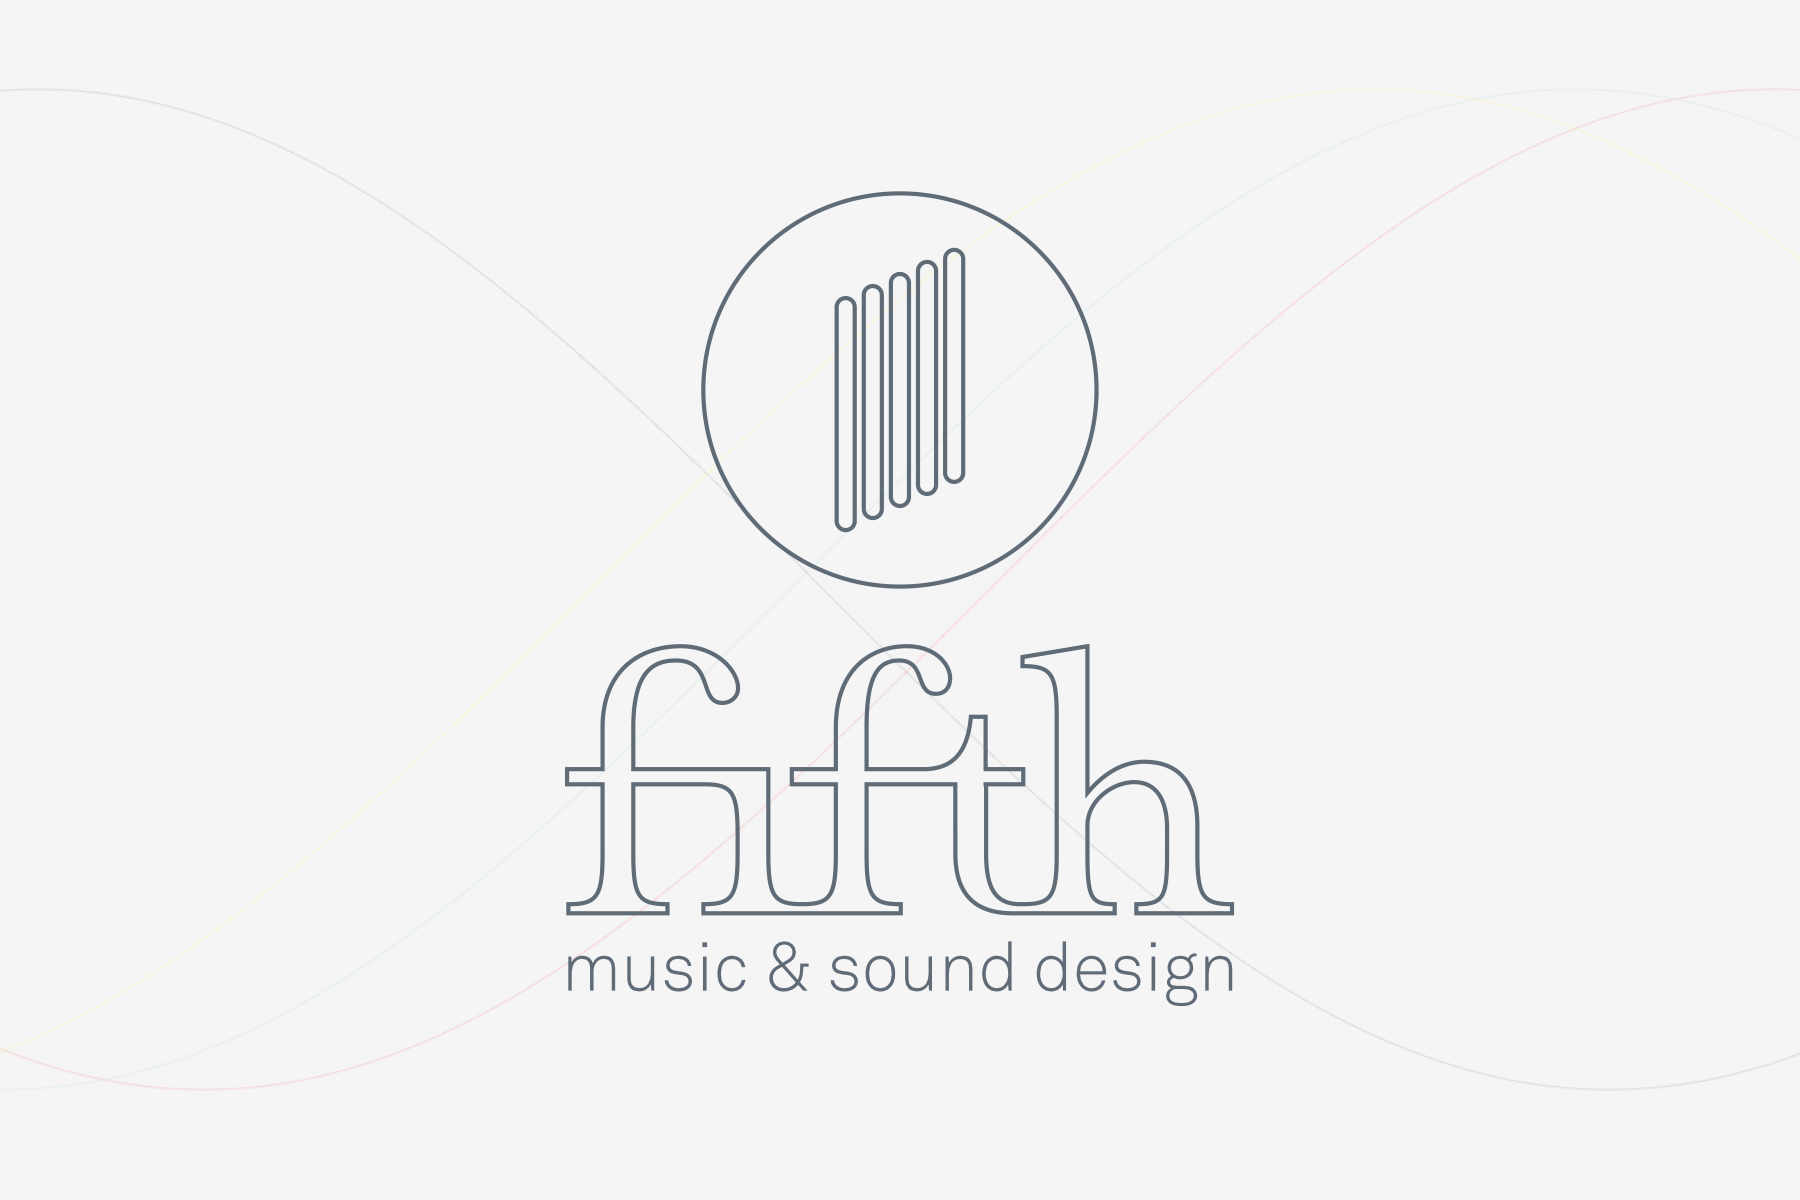 (c) Fifth-music.com